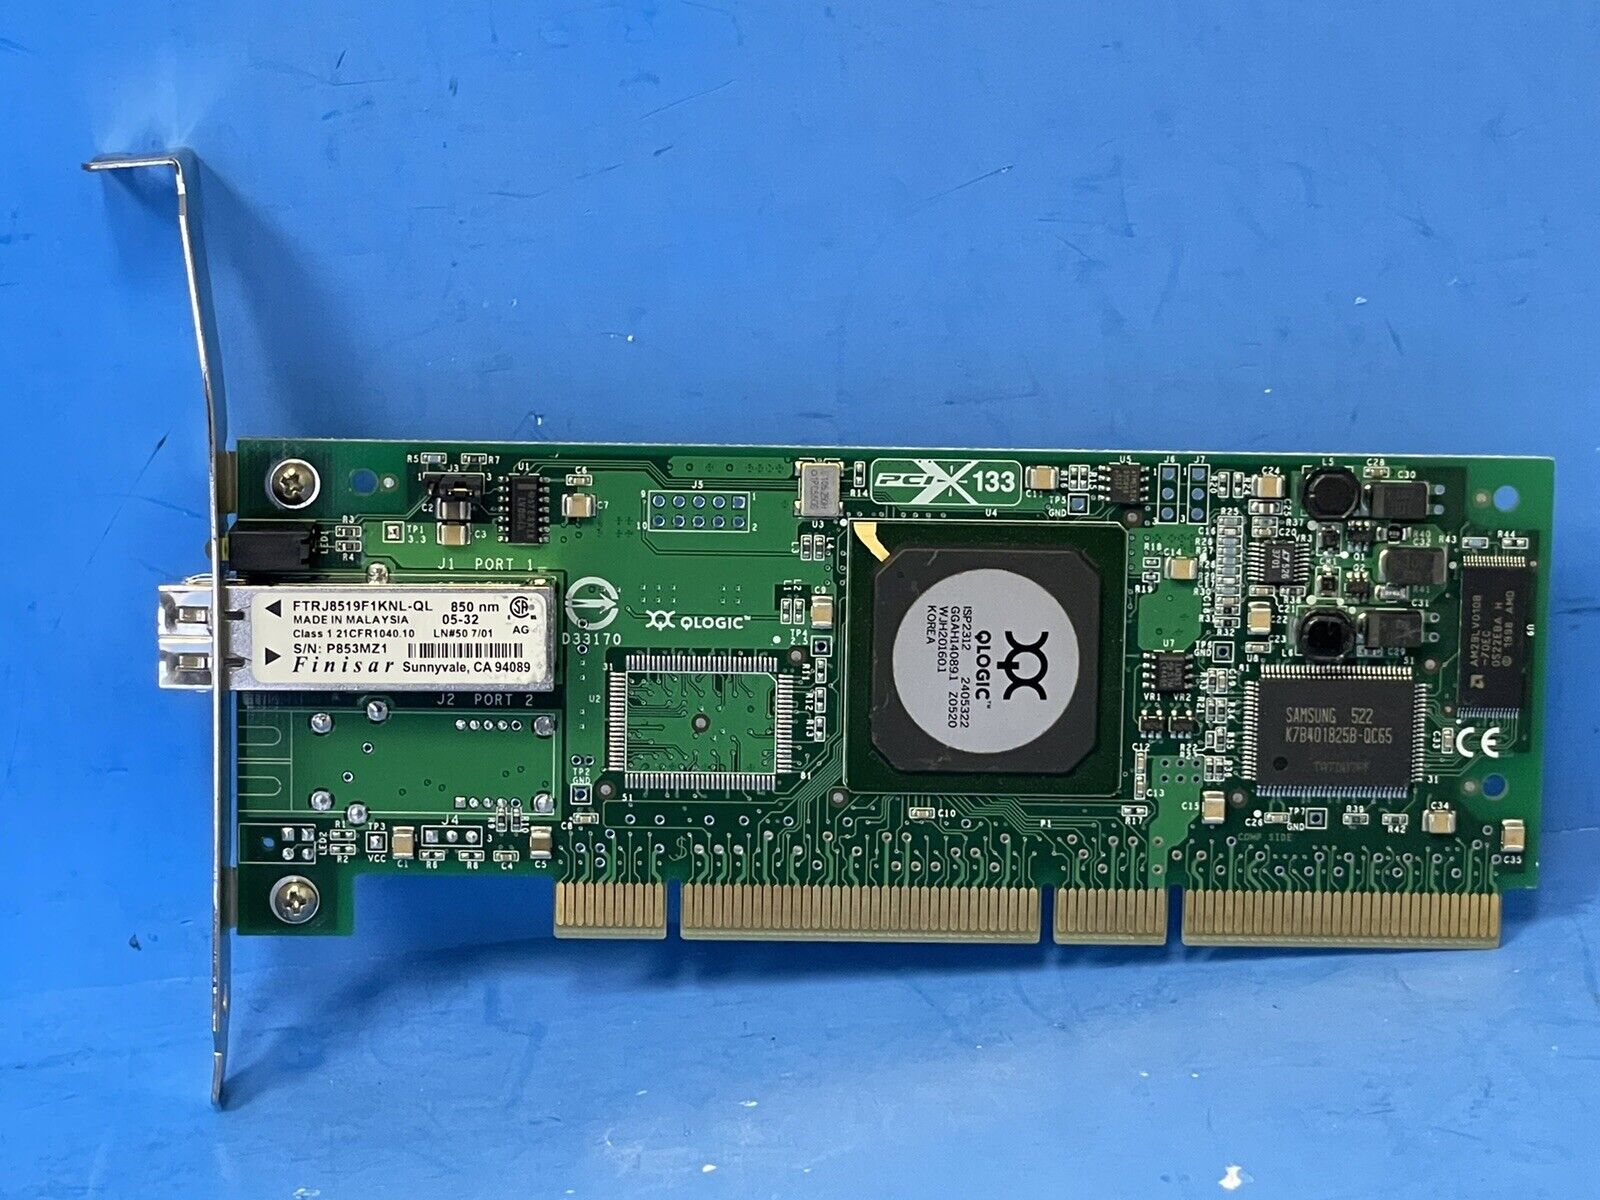 QLogic QLE2460 PCI-X 133 4GB SPEED